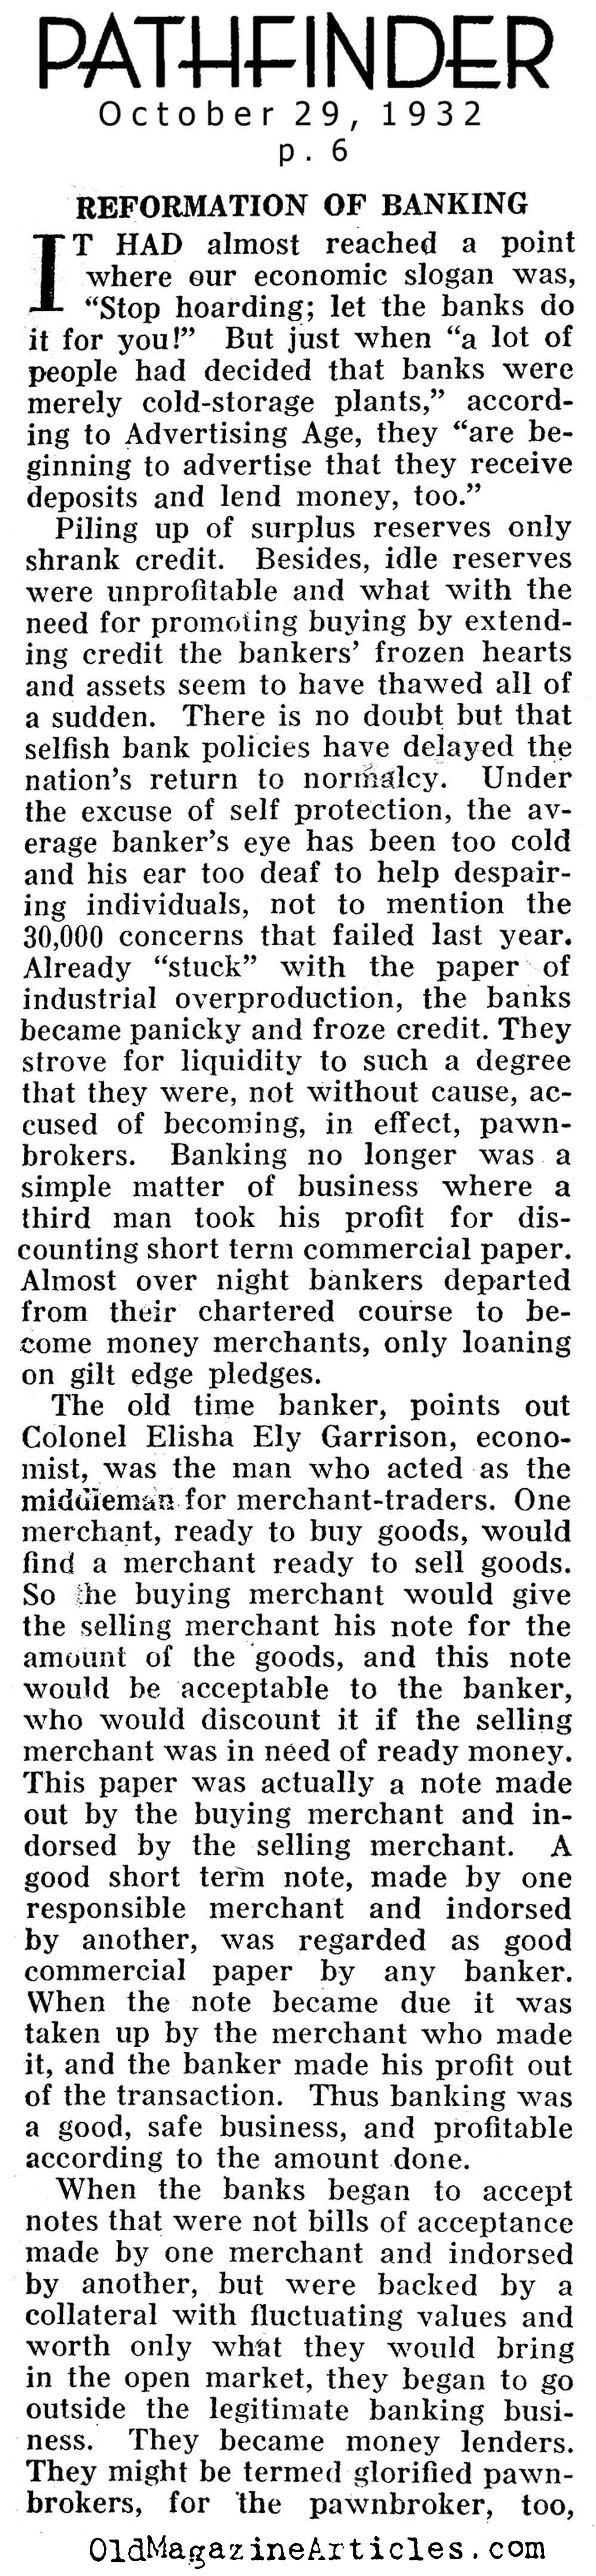 Reform The Banks! (Pathfinder Magazine, 1932)